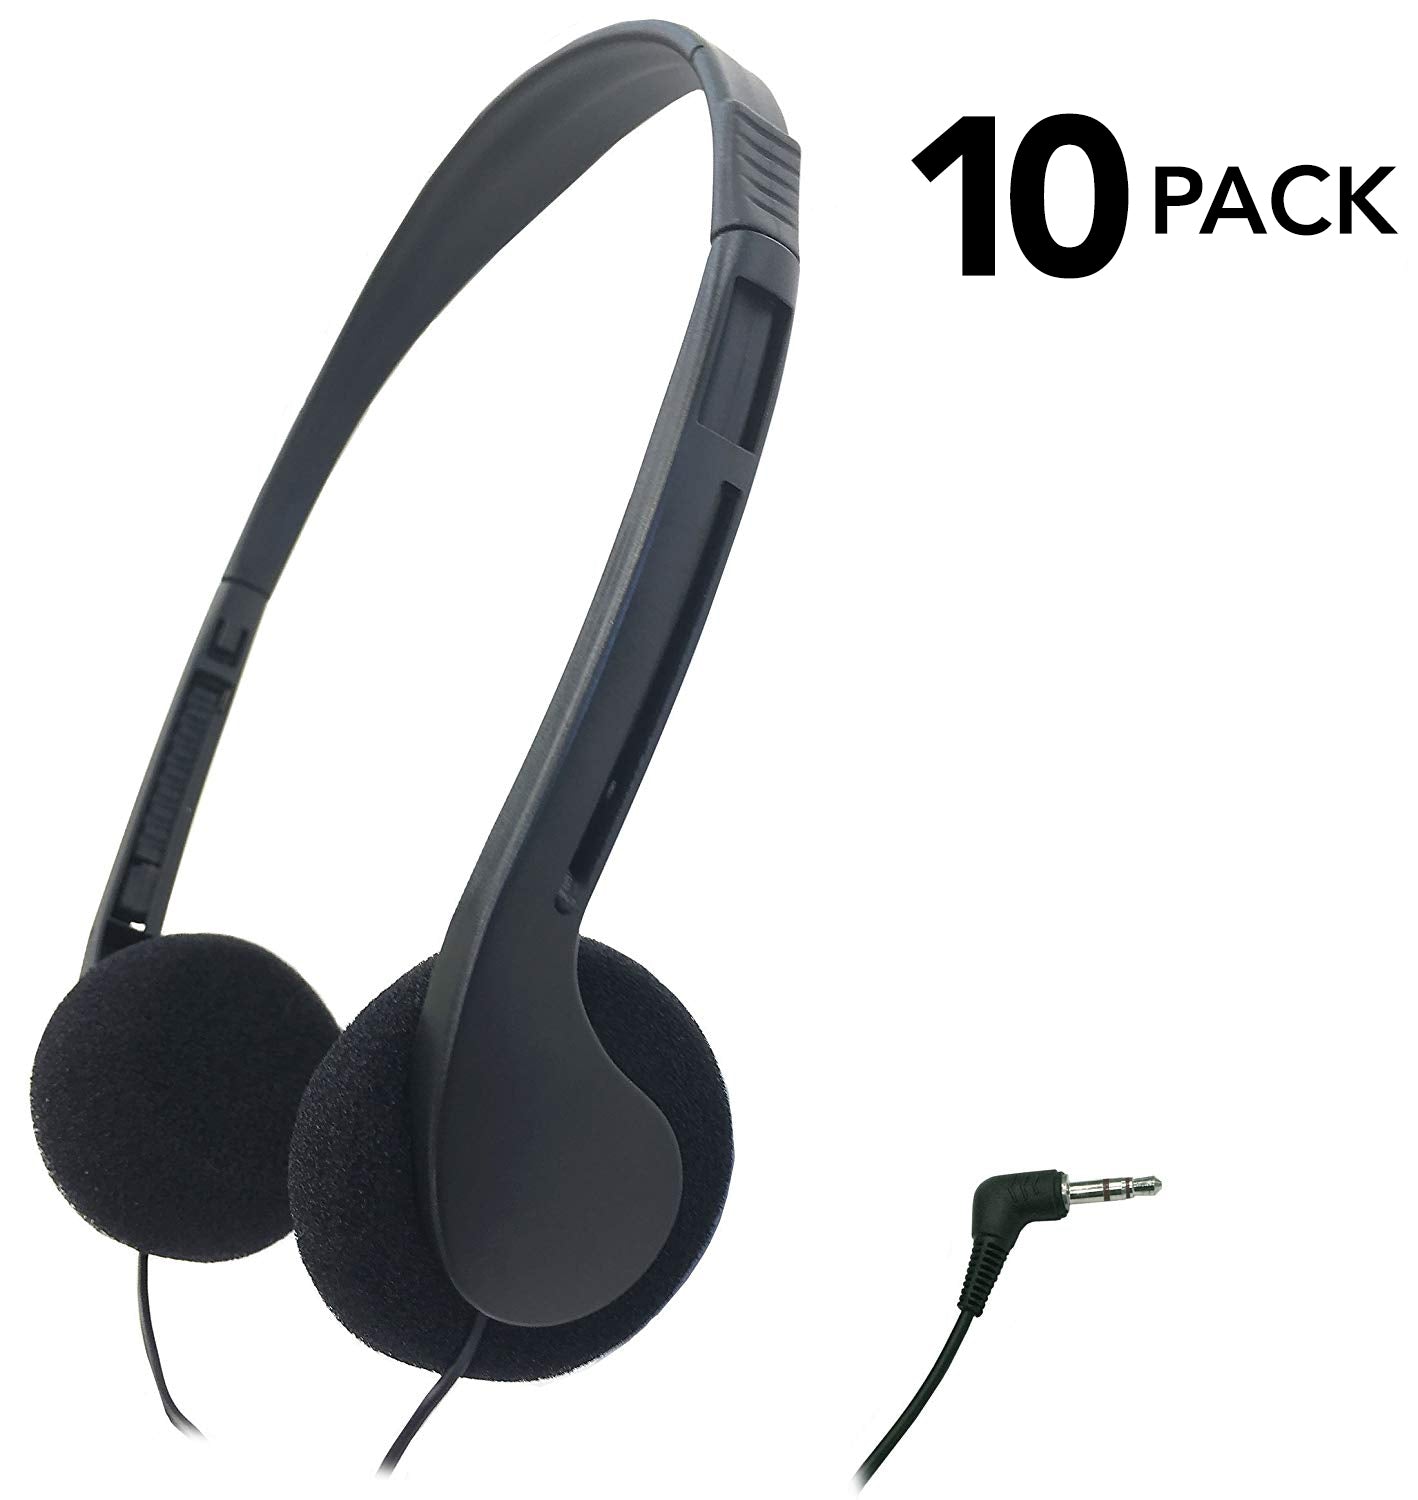 10-Pack Low-Cost Headphones for Schools & Libraries